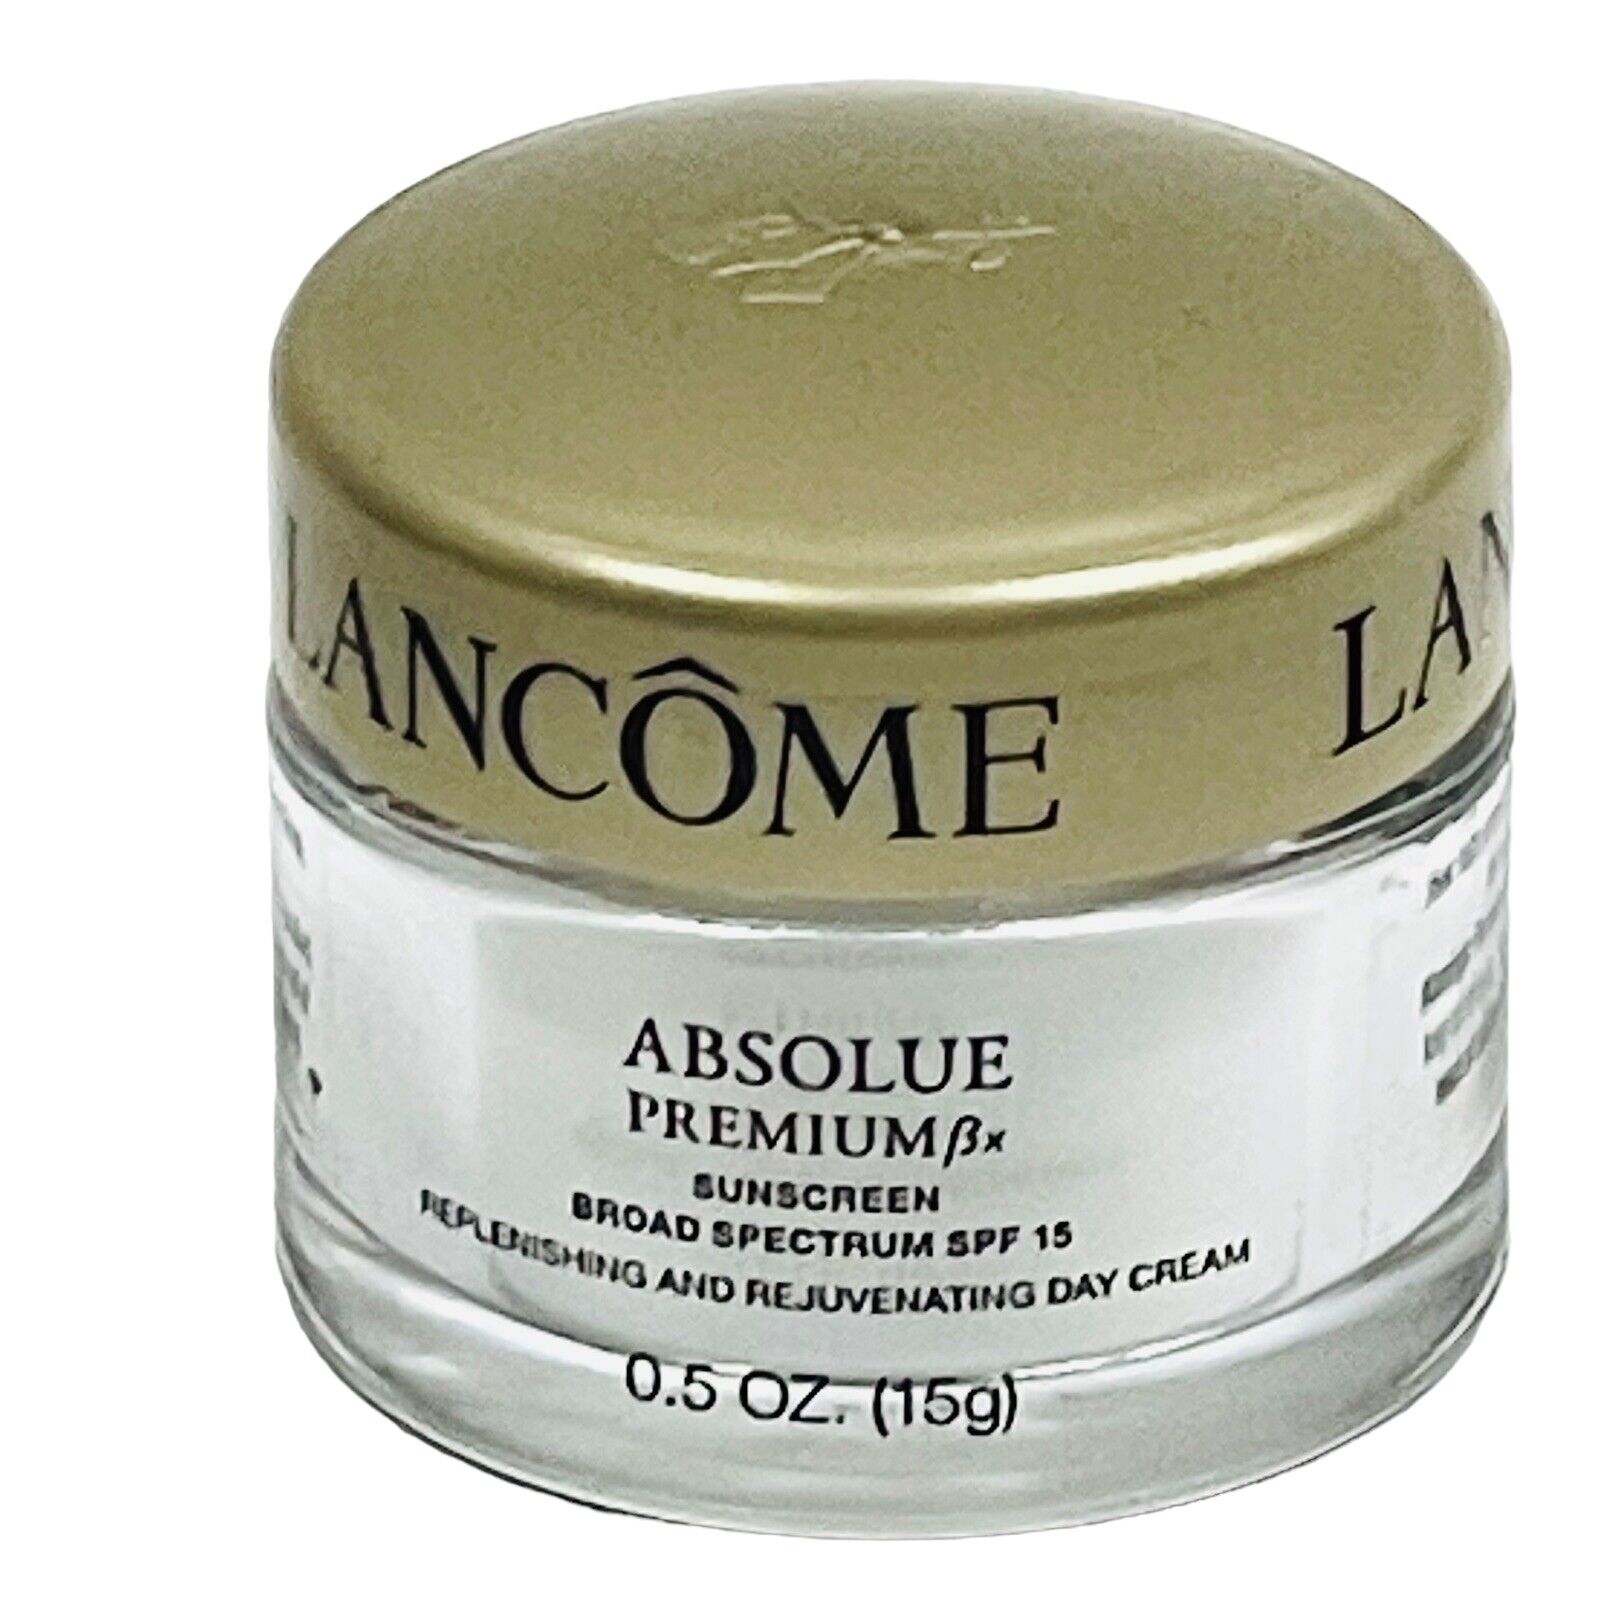 Lancome Paris Empty .5 oz 15 g Jar Absolue Premium Bx Sunscreen & Day Cream